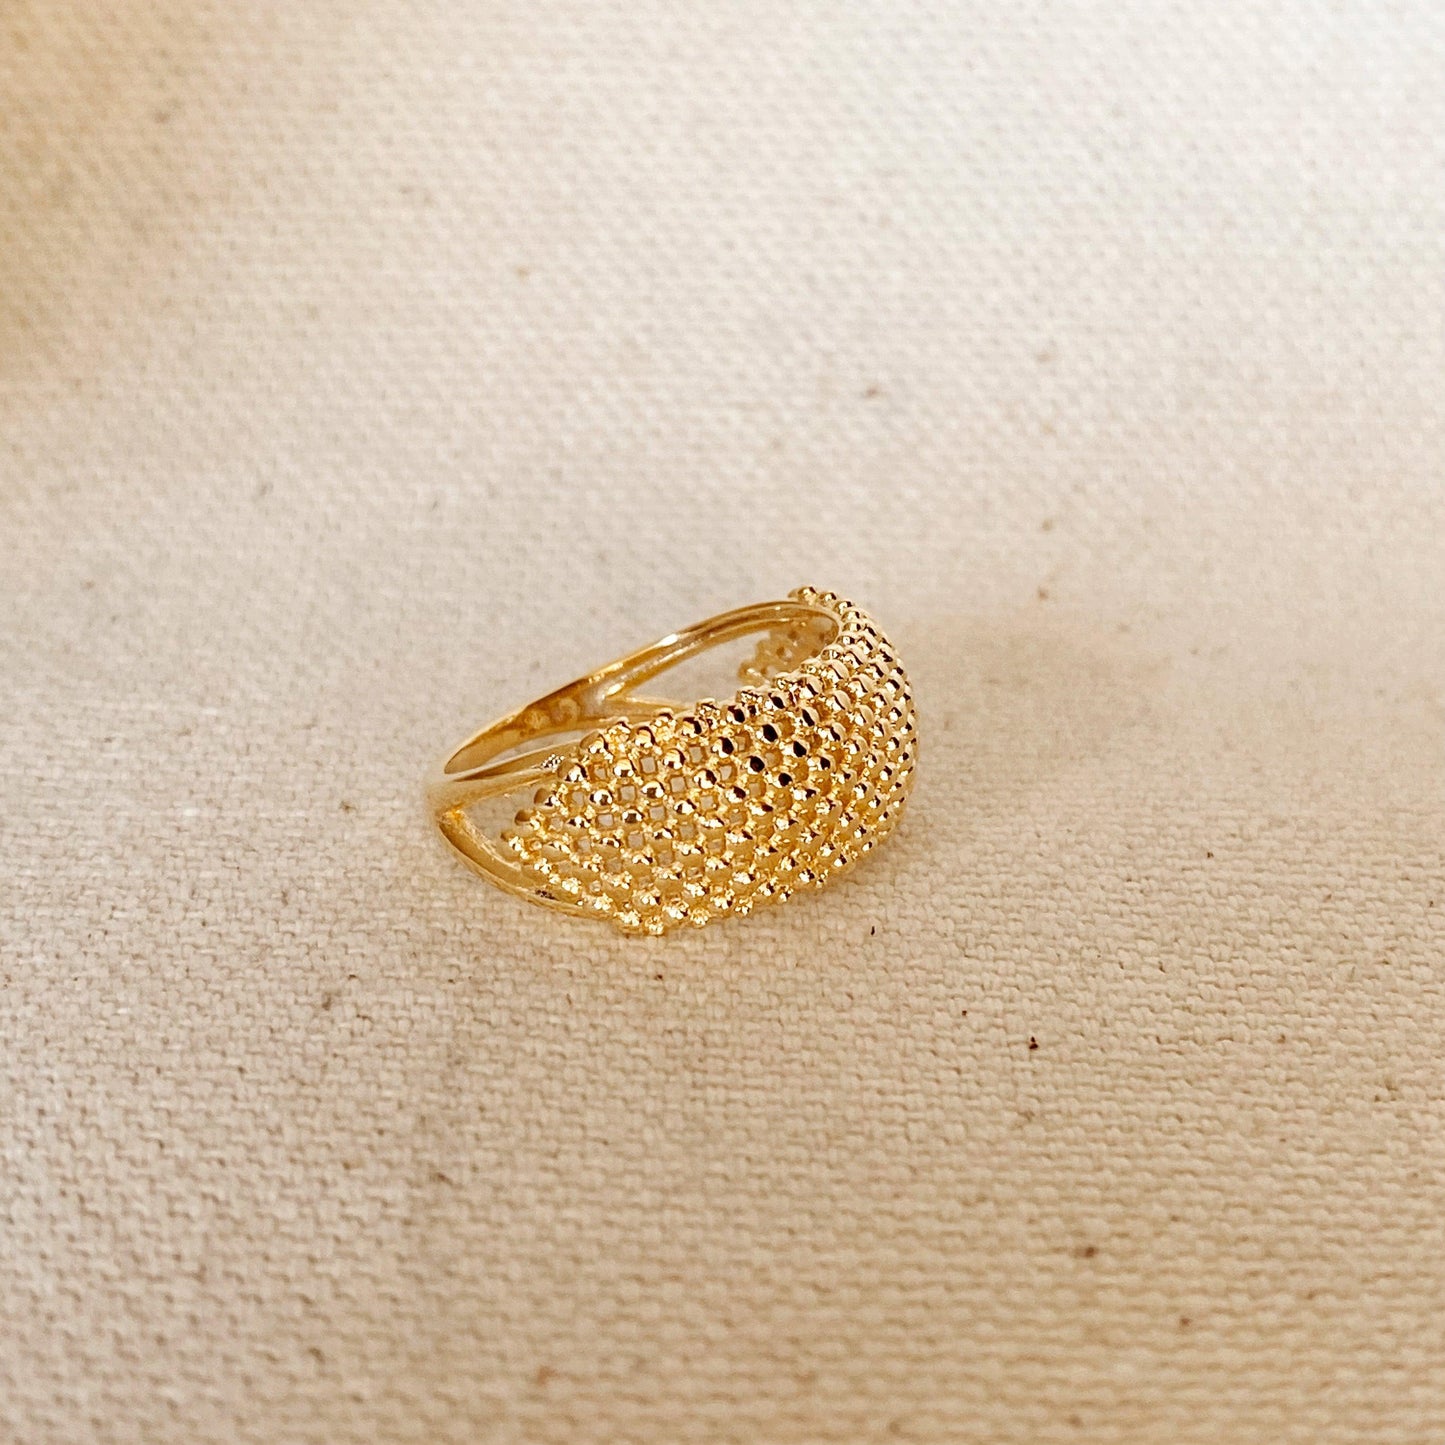 GoldFi 18k Gold Filled Bead Cluster Ring